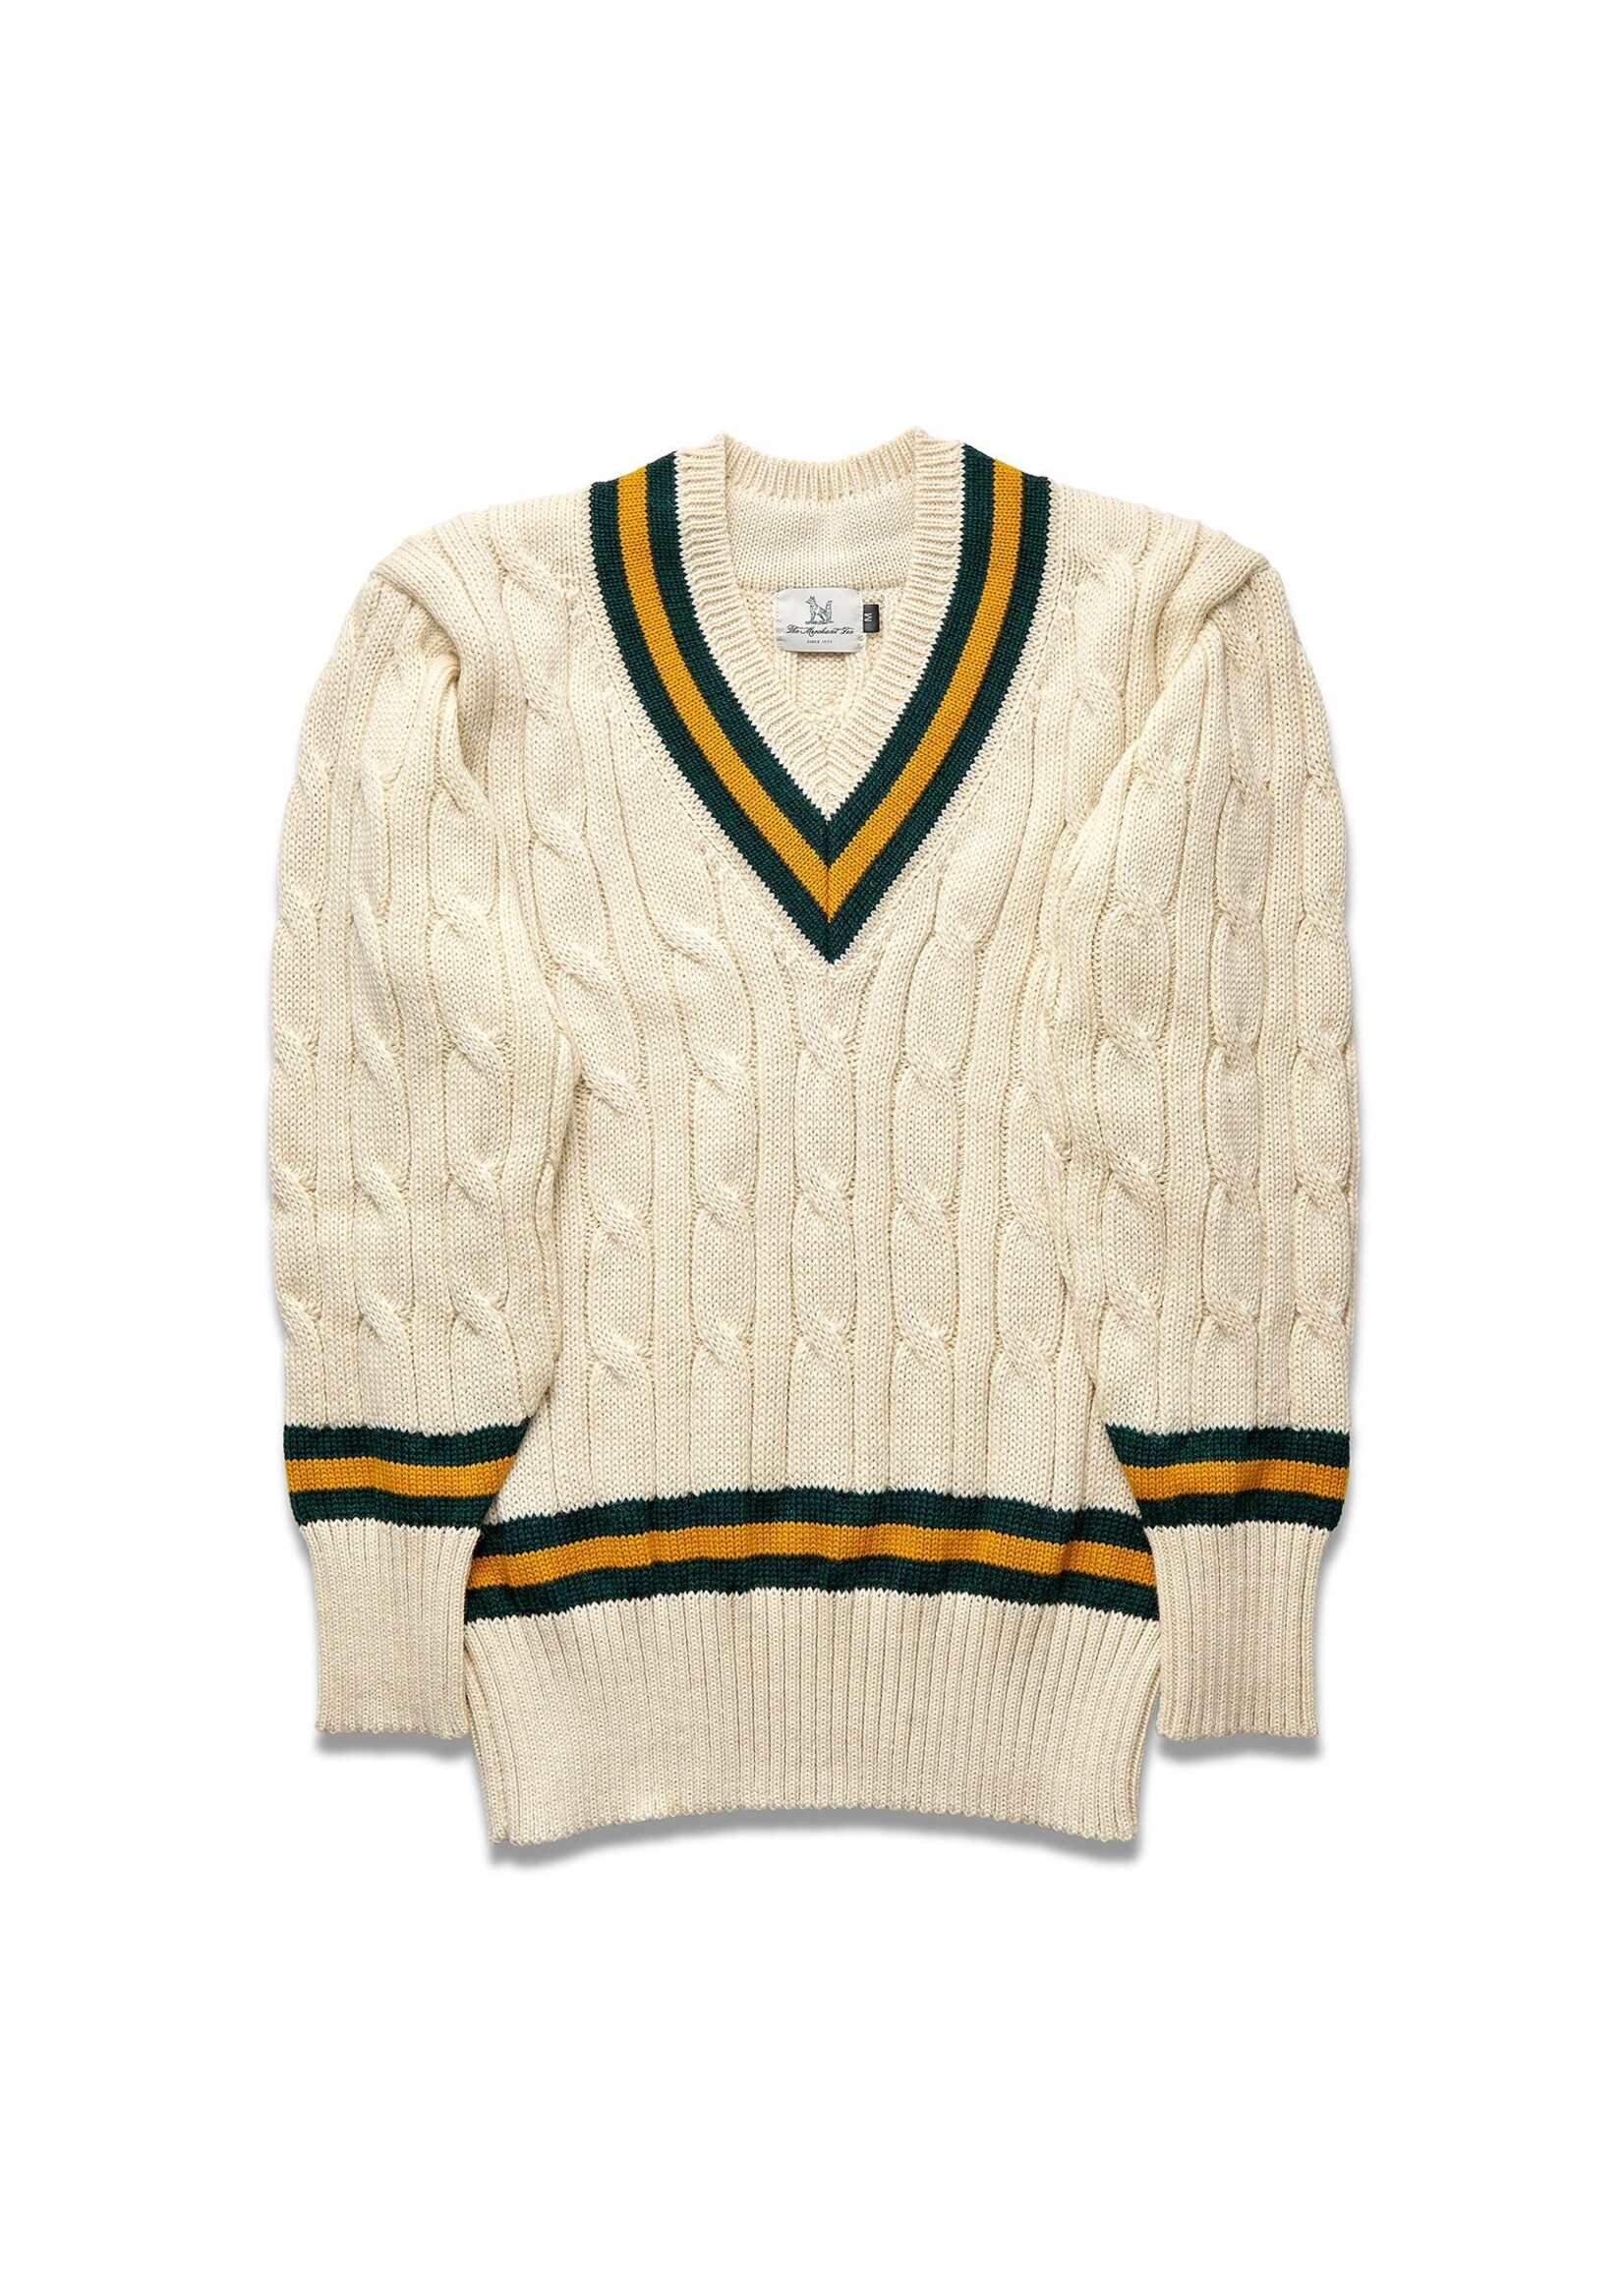 Fox flannel Fox flannel cricket sweater